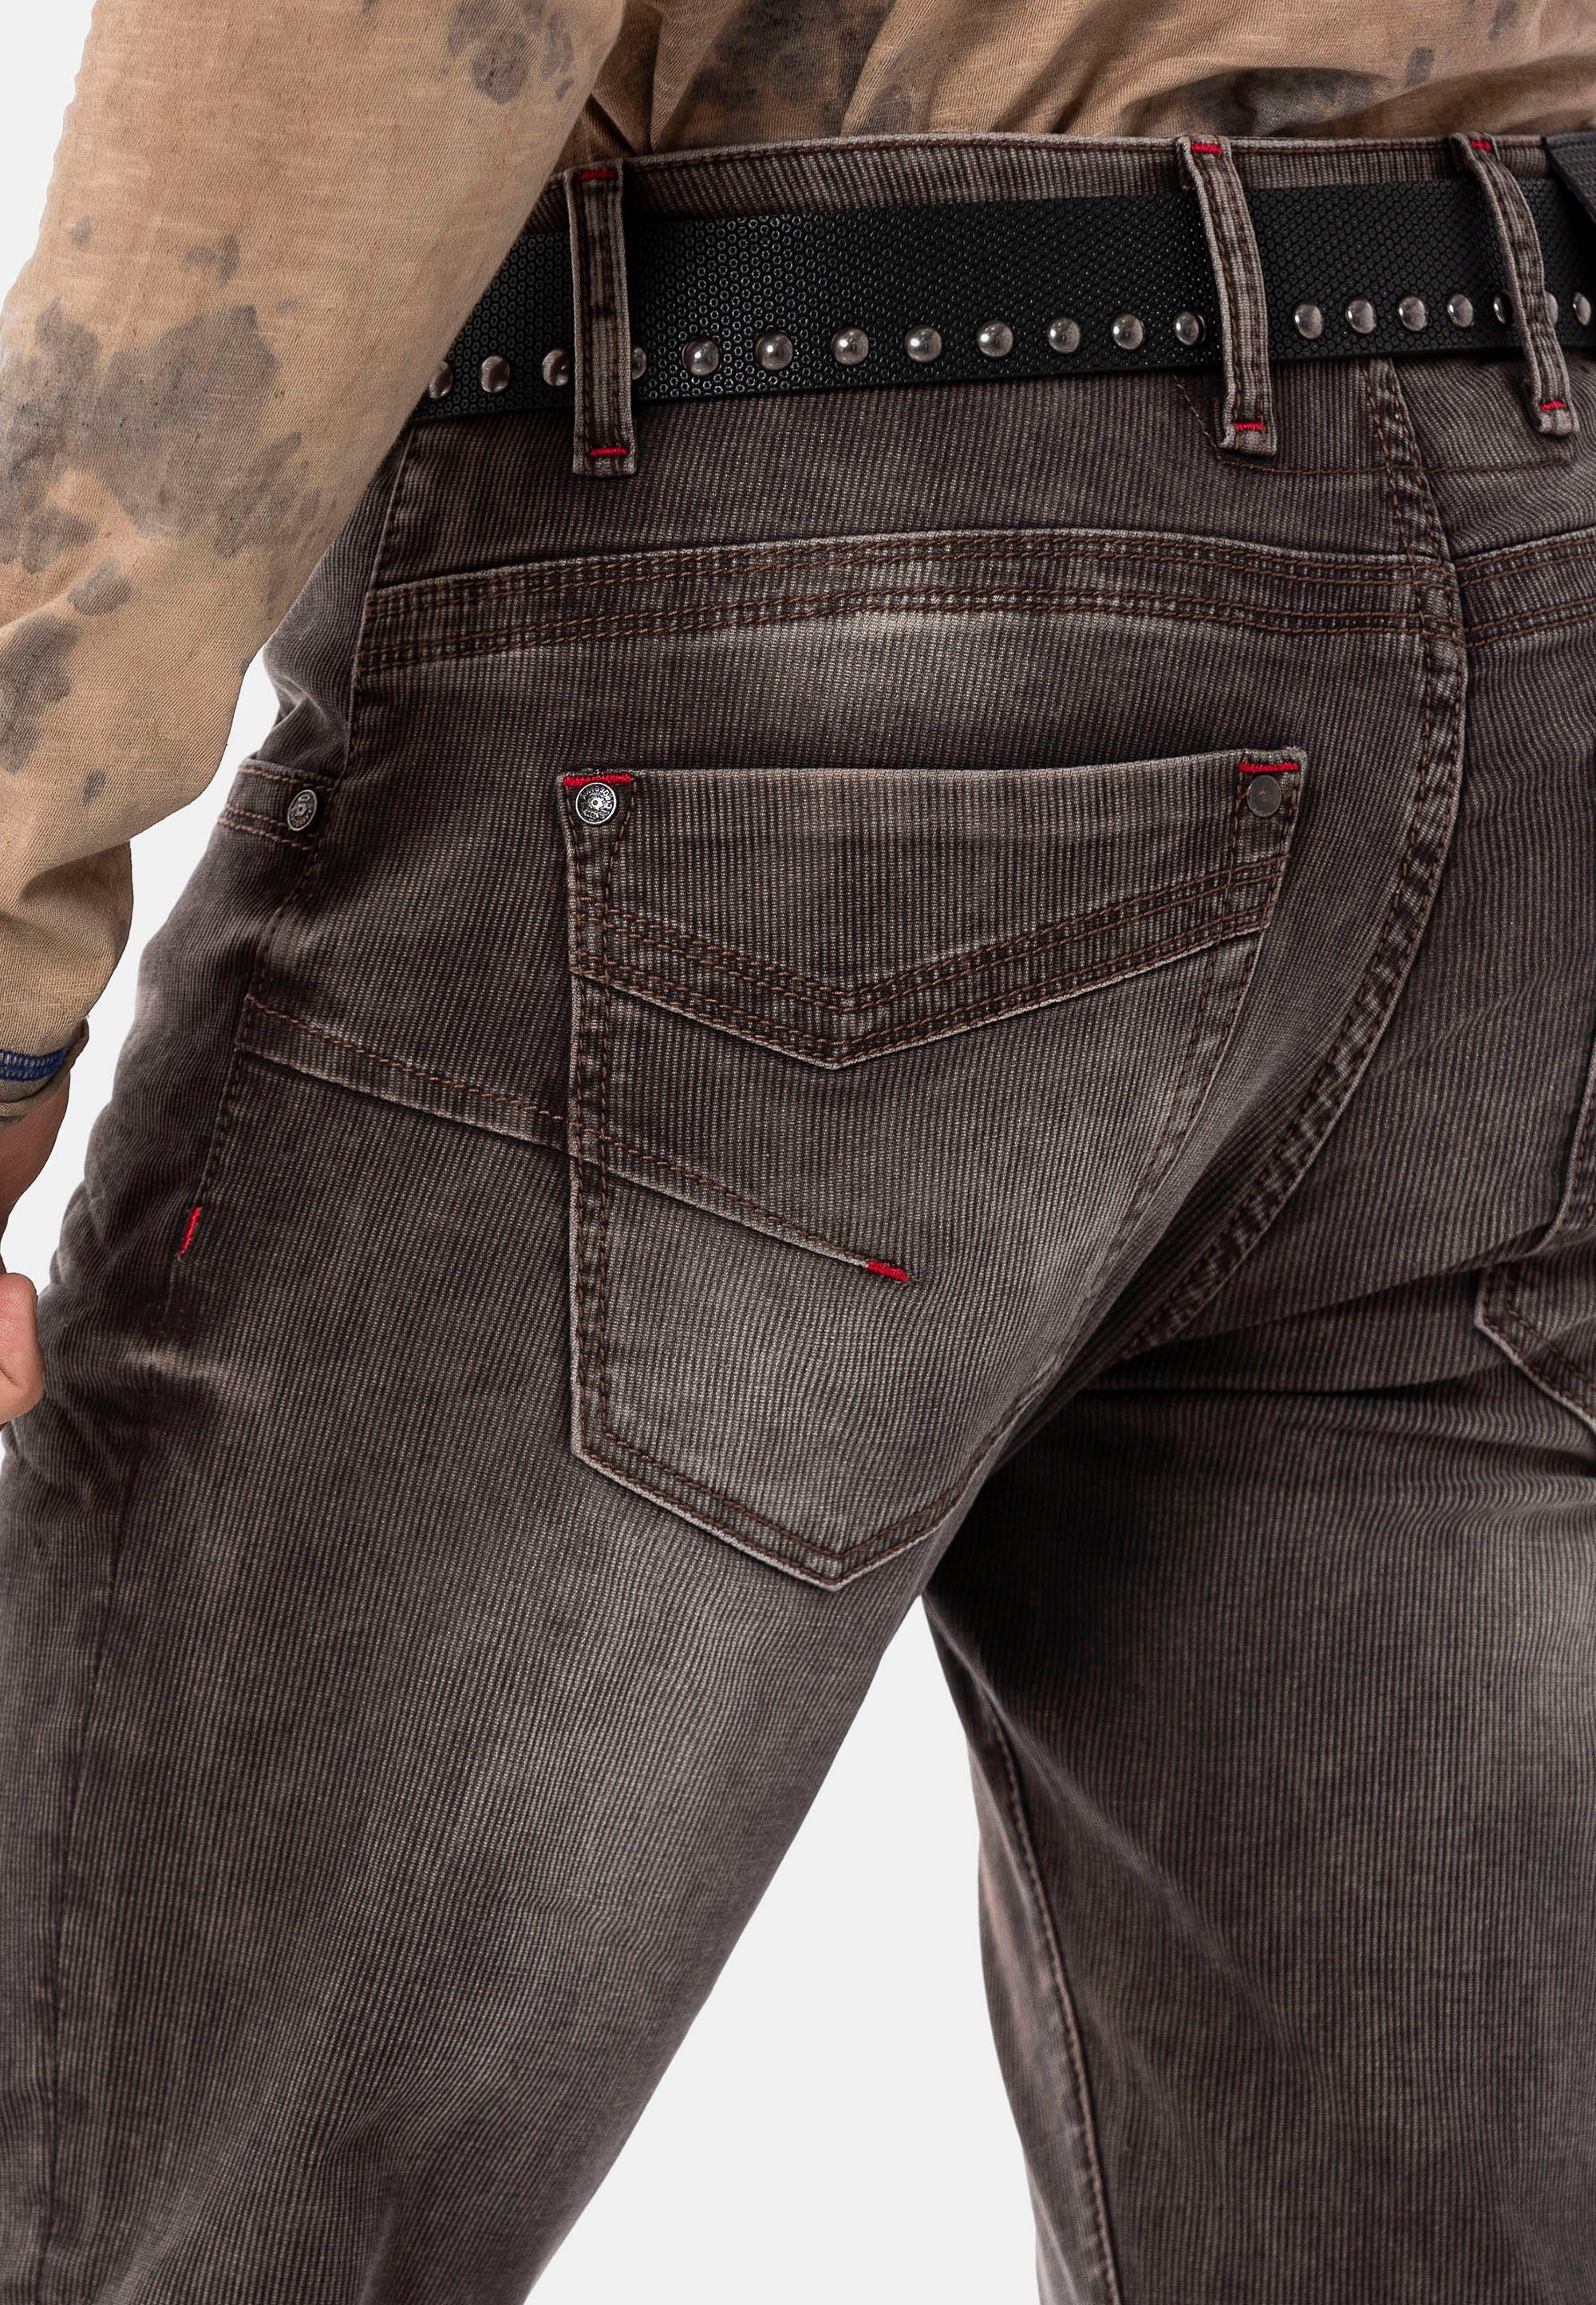 & stilvollem Cord-Design Baxx Cipo in braun Straight-Jeans